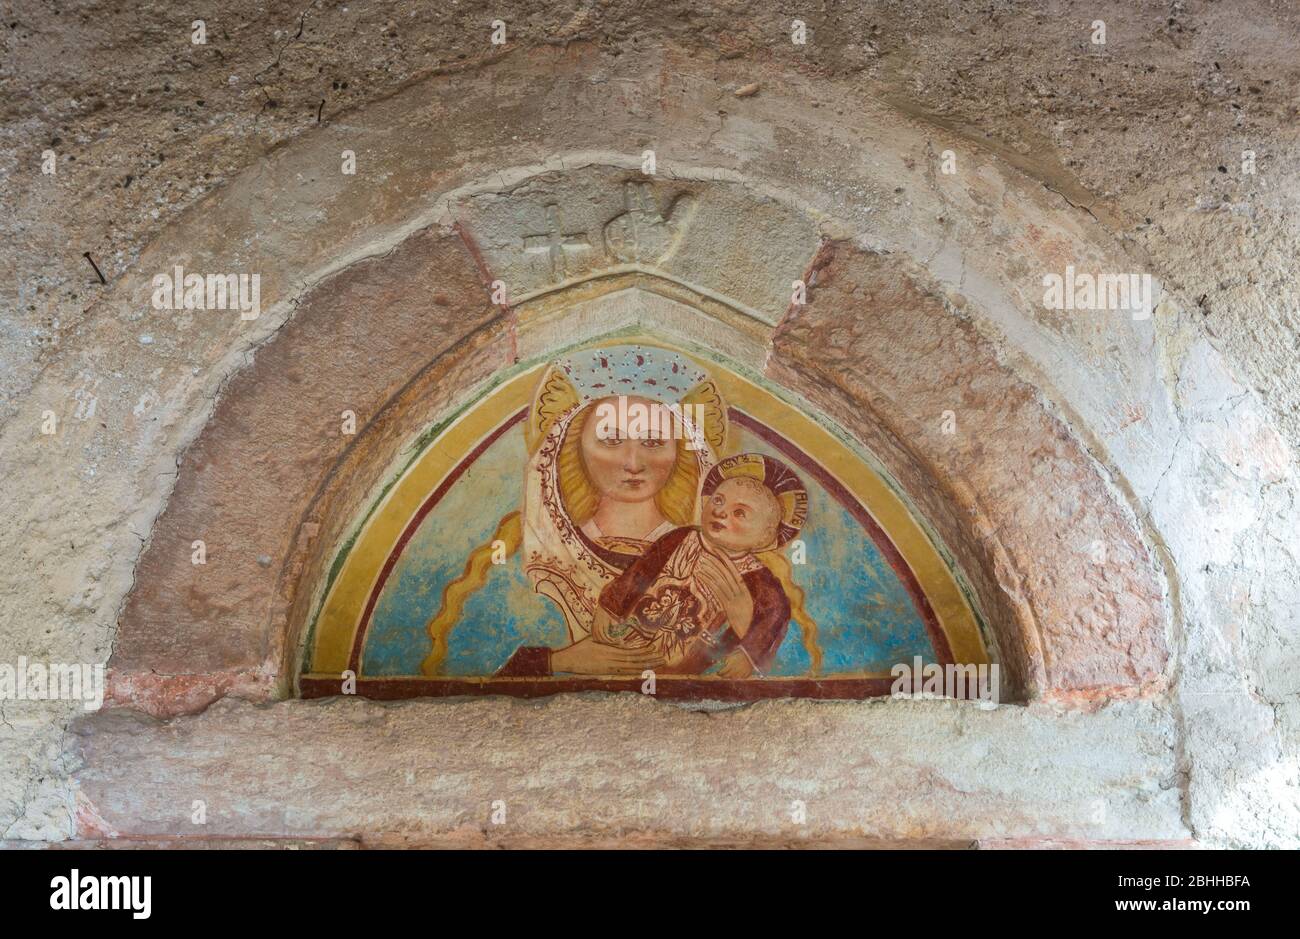 Valuable medieval frescoes in the Church of San Marcello in Dardine, Province of Trento, Trentino Alto Adige, Italy - january 29, 2019 Stock Photo